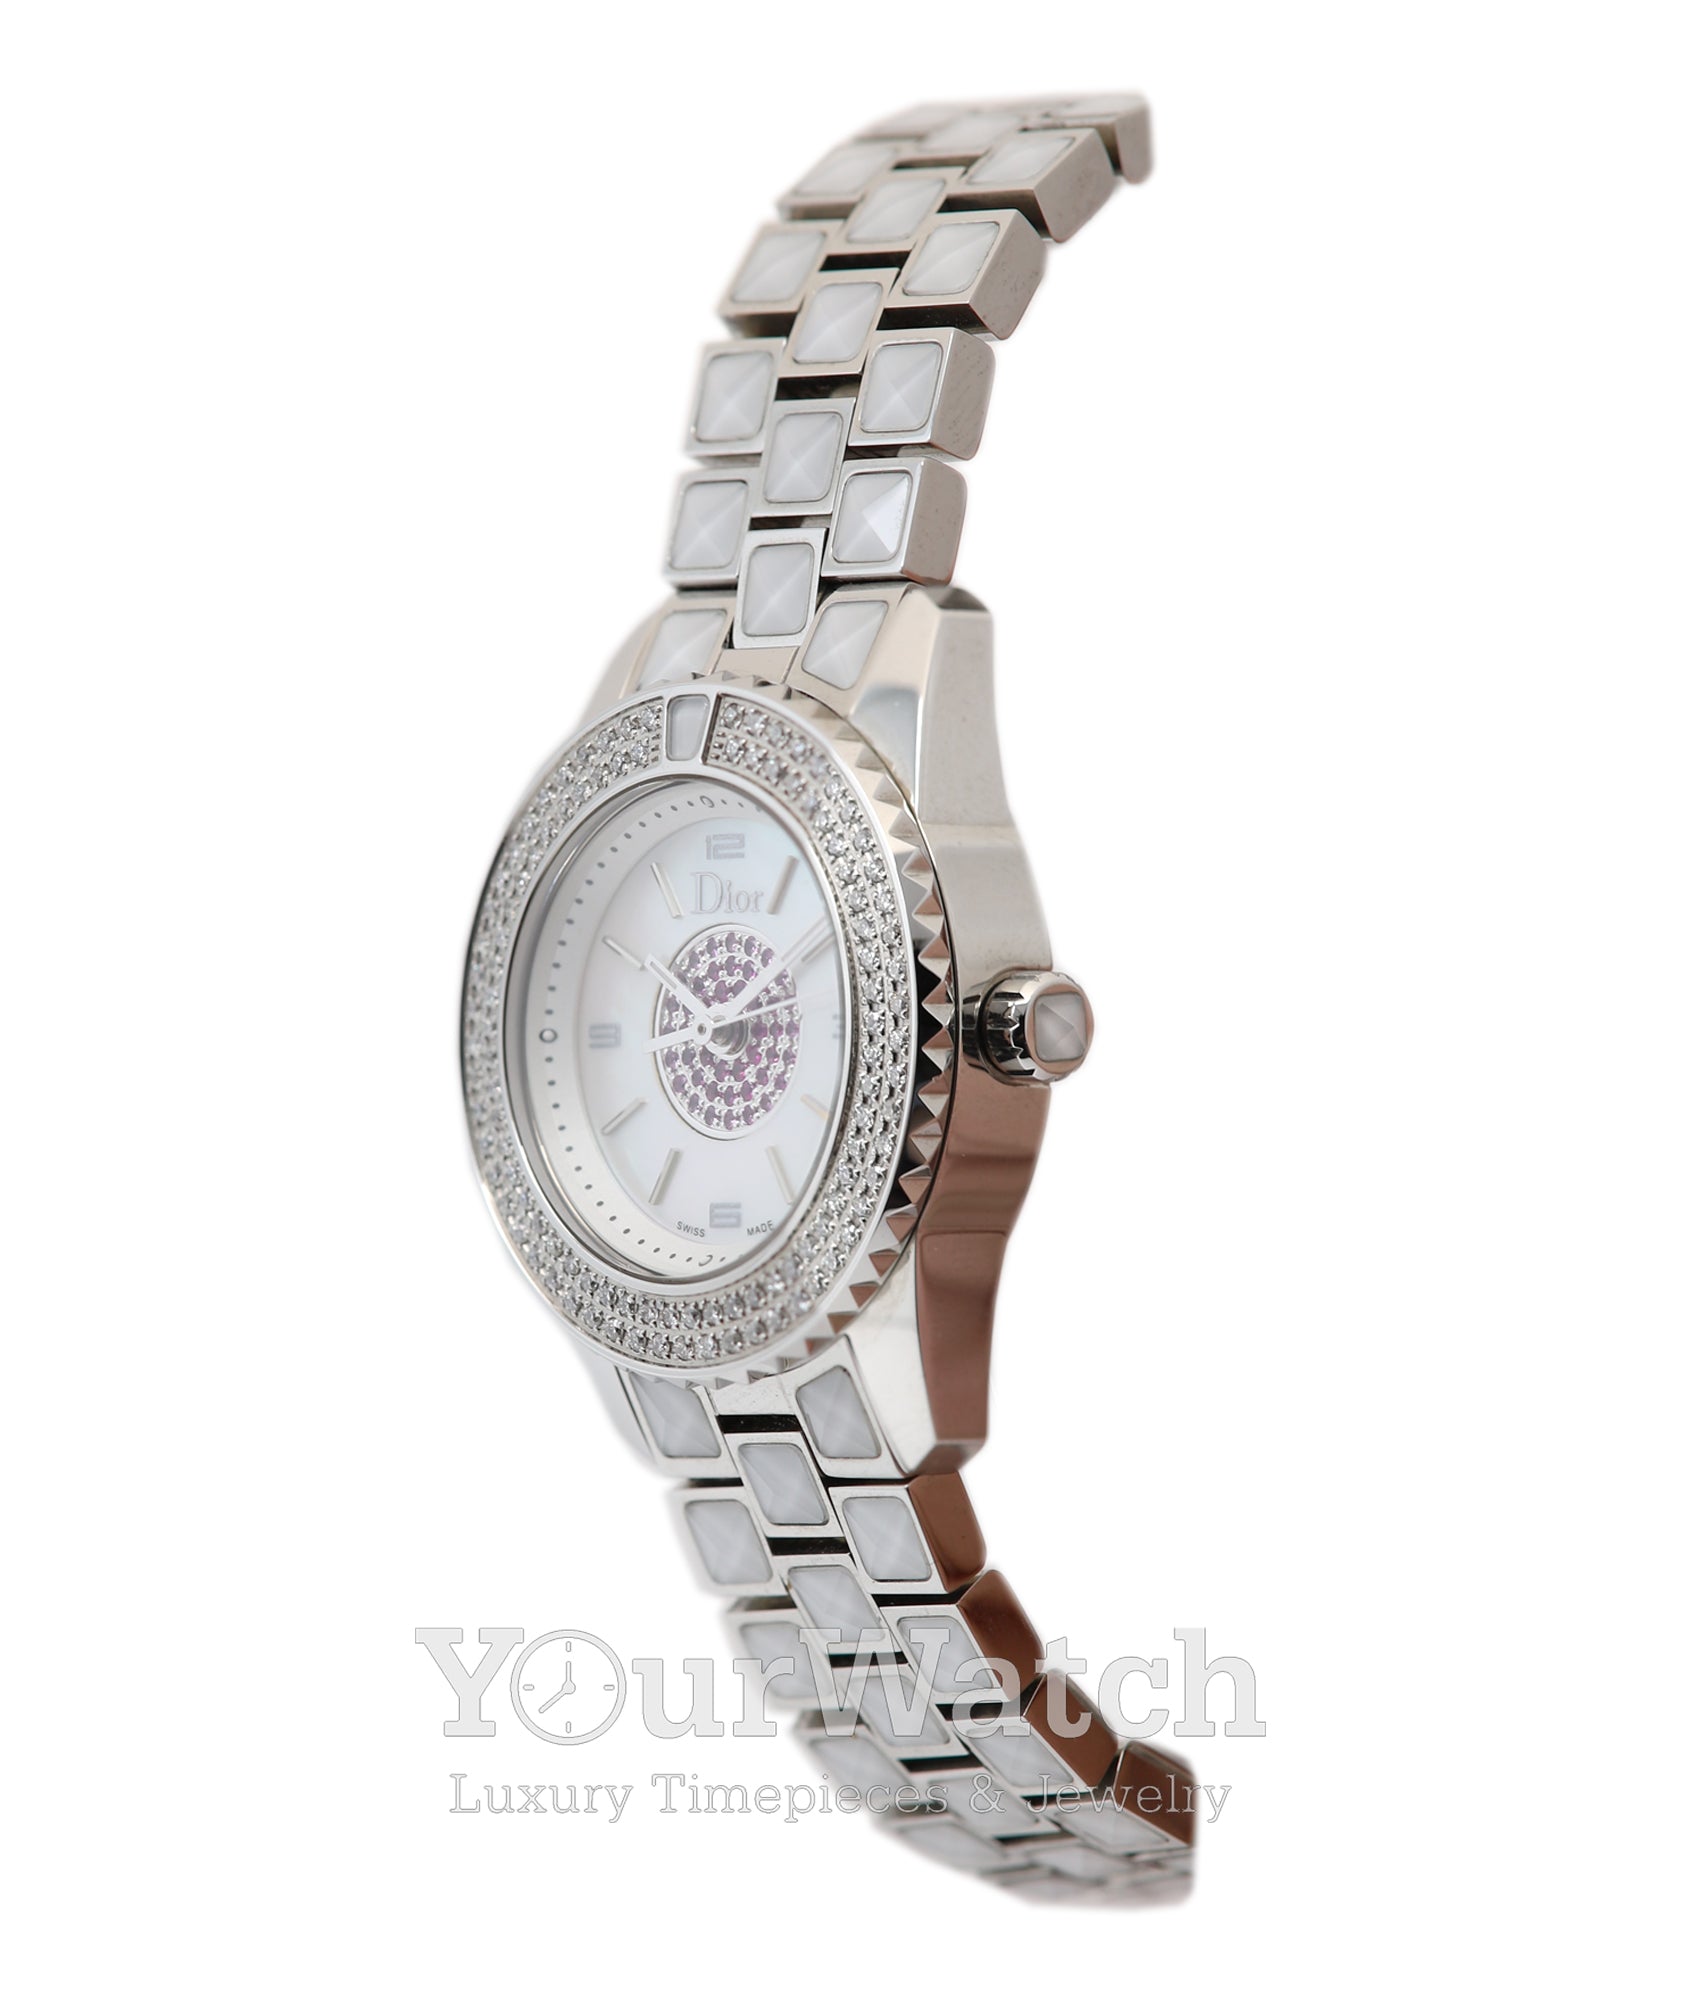 Christian Dior Christal Women's Quartz Watch cd112118m002